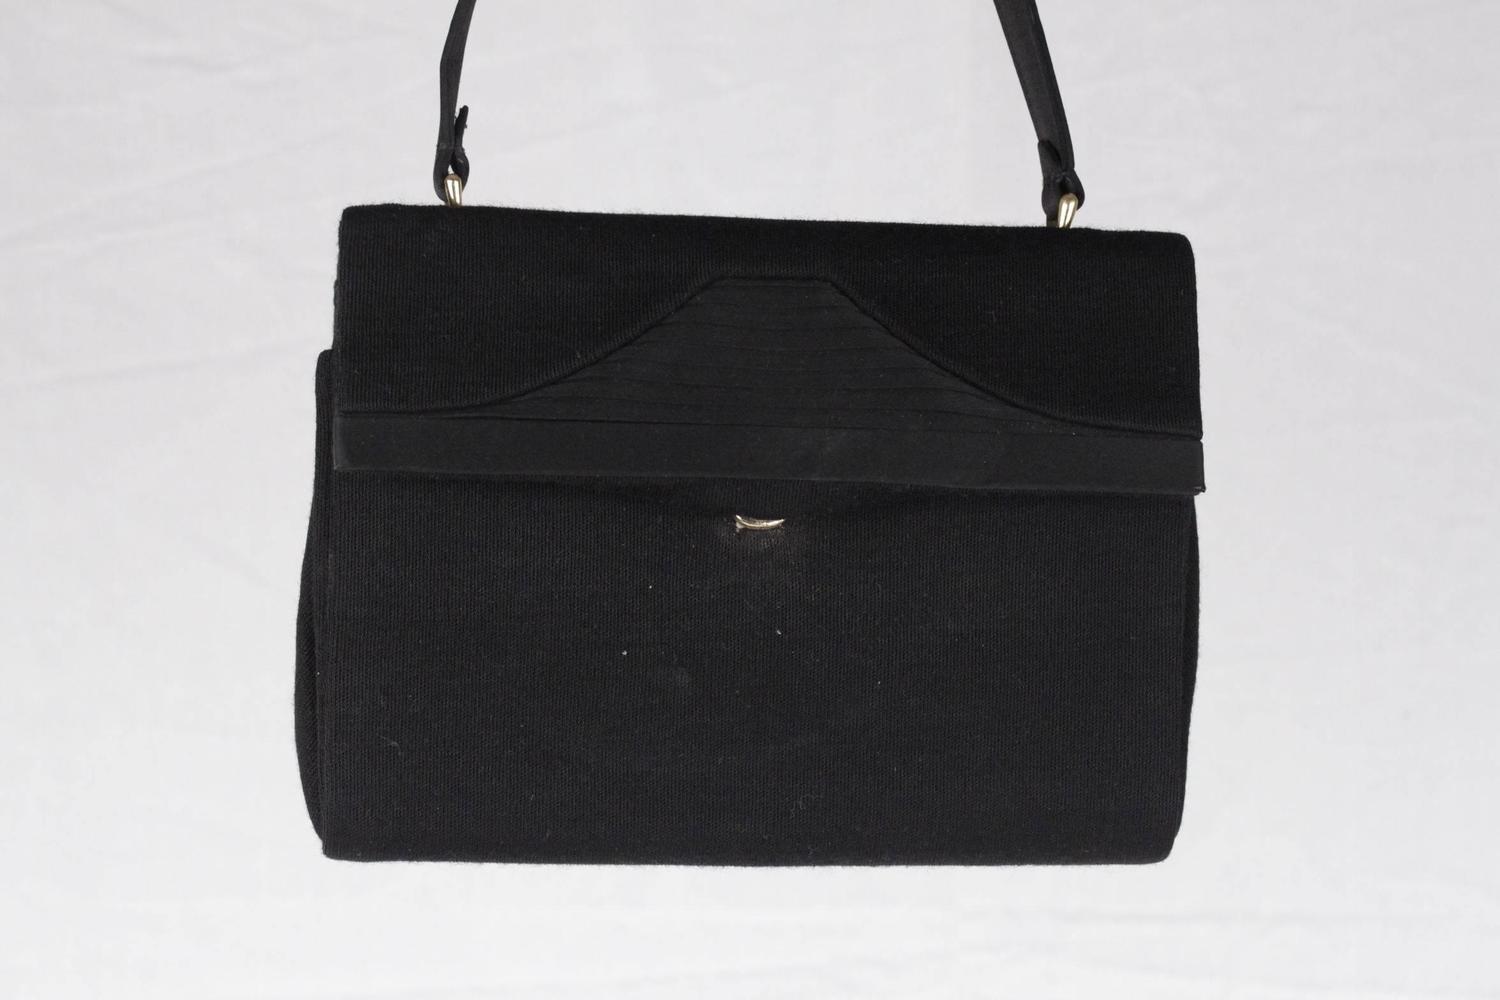 GUCCI VINTAGE Black Fabric HANDBAG Evening Bag PURSE For Sale at 1stdibs